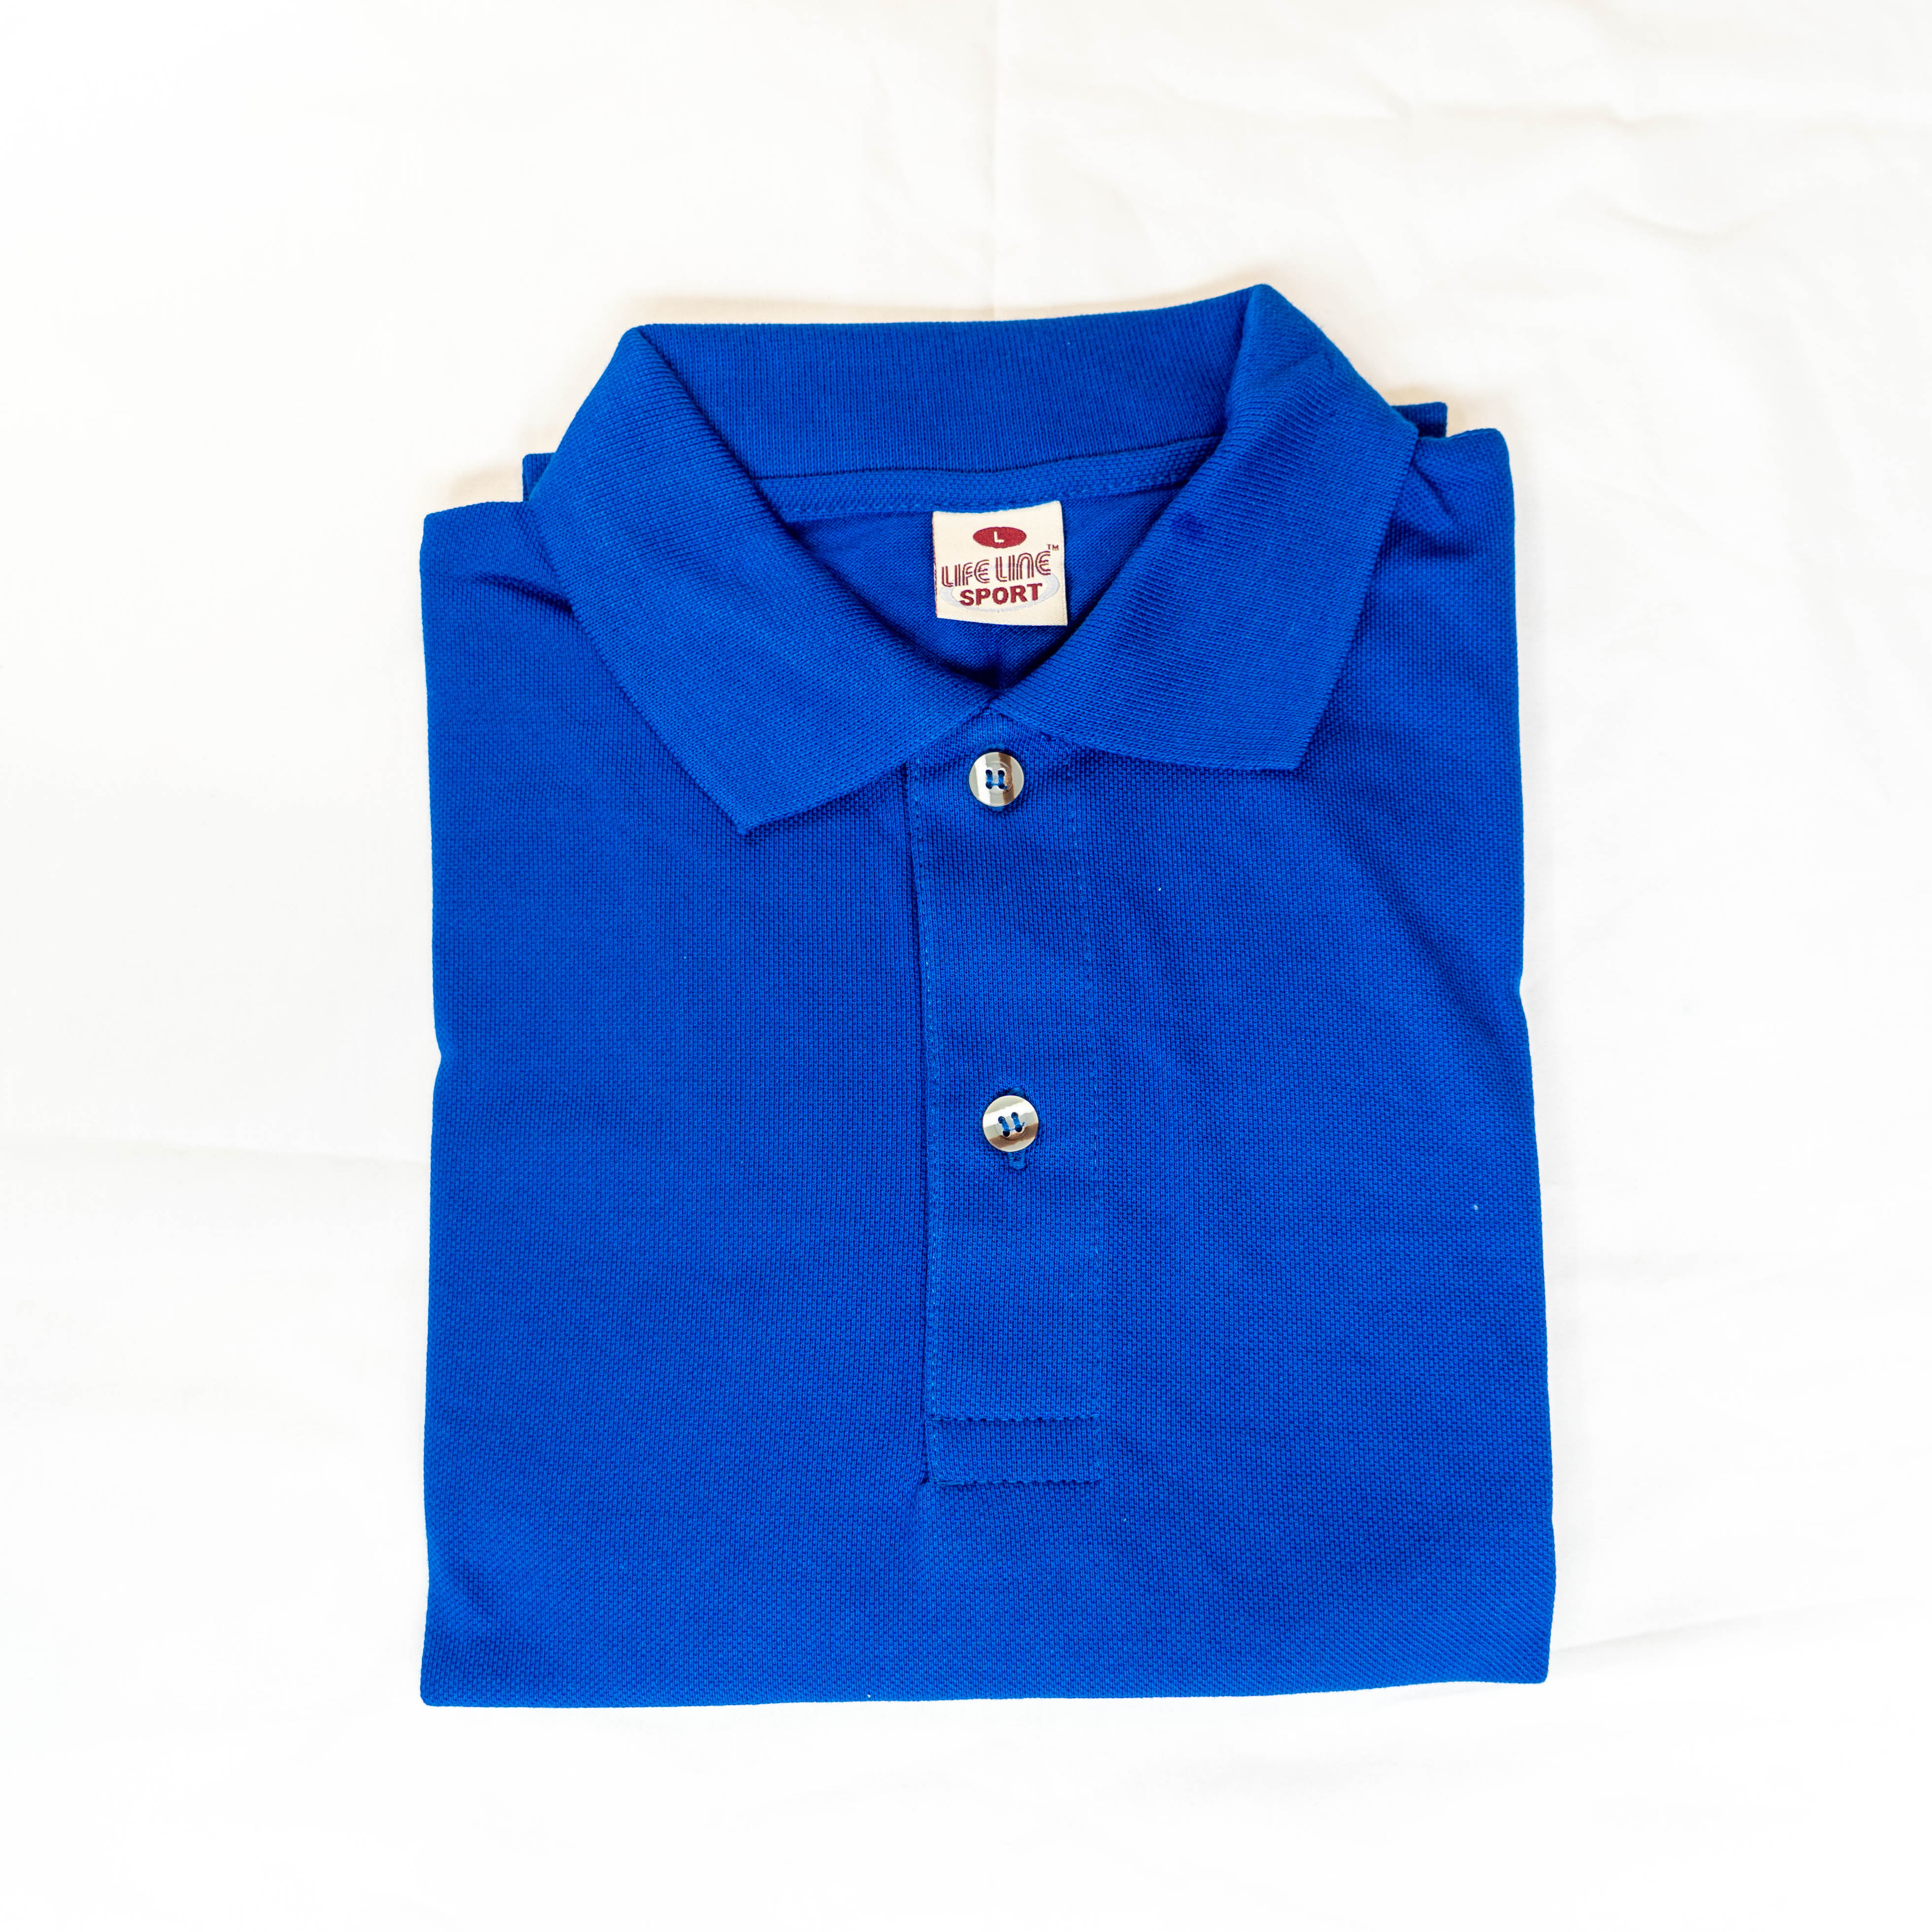 [kevsmerchandising] Lifeline Honeycomb Polo Shirt Royal Blue | Lazada PH